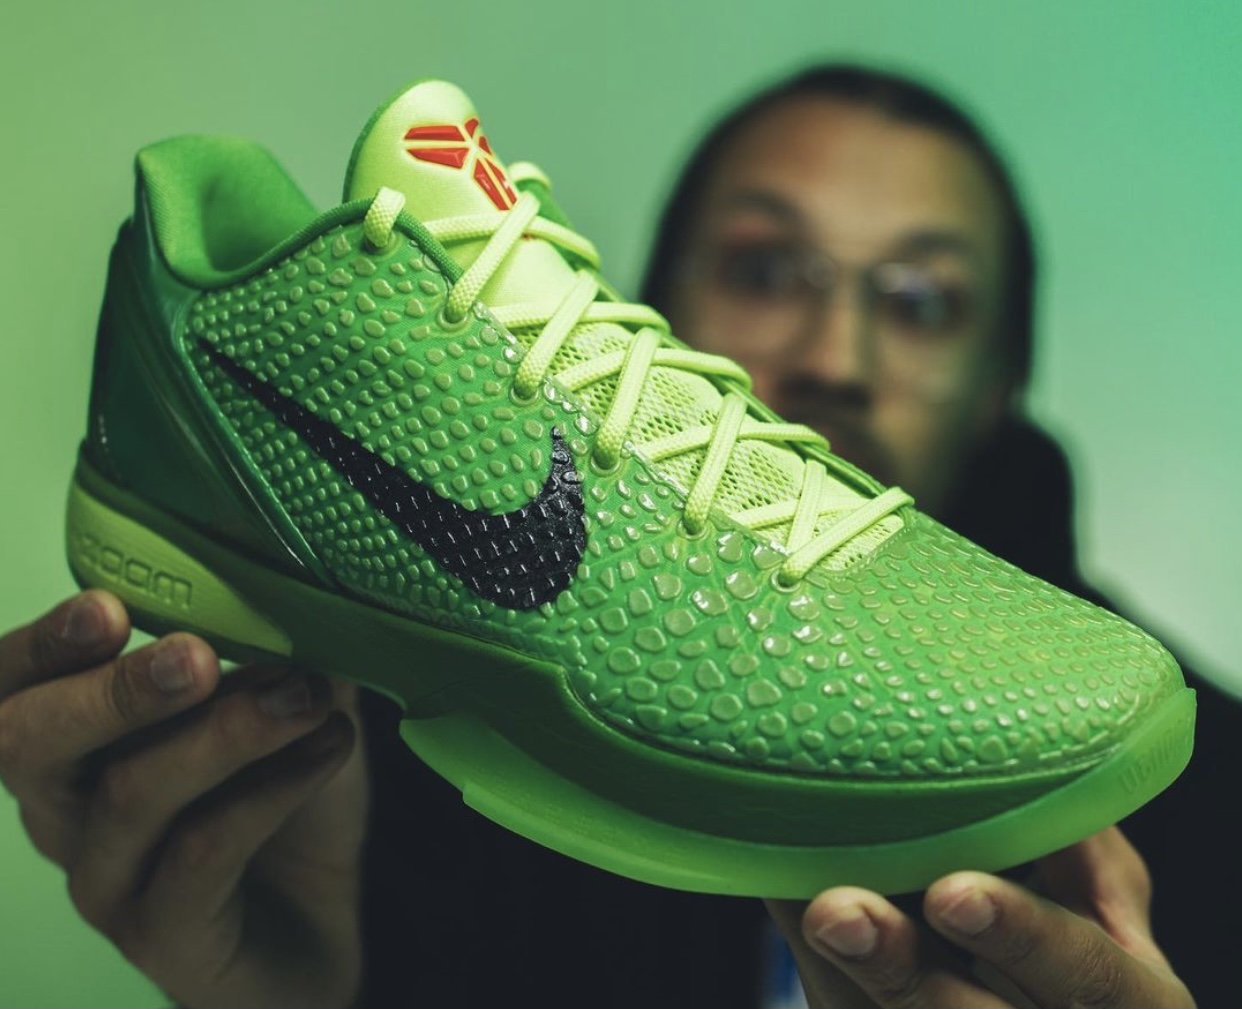 Nike Kobe 6 Protro “Grinch” Rumored To Release Very Soon